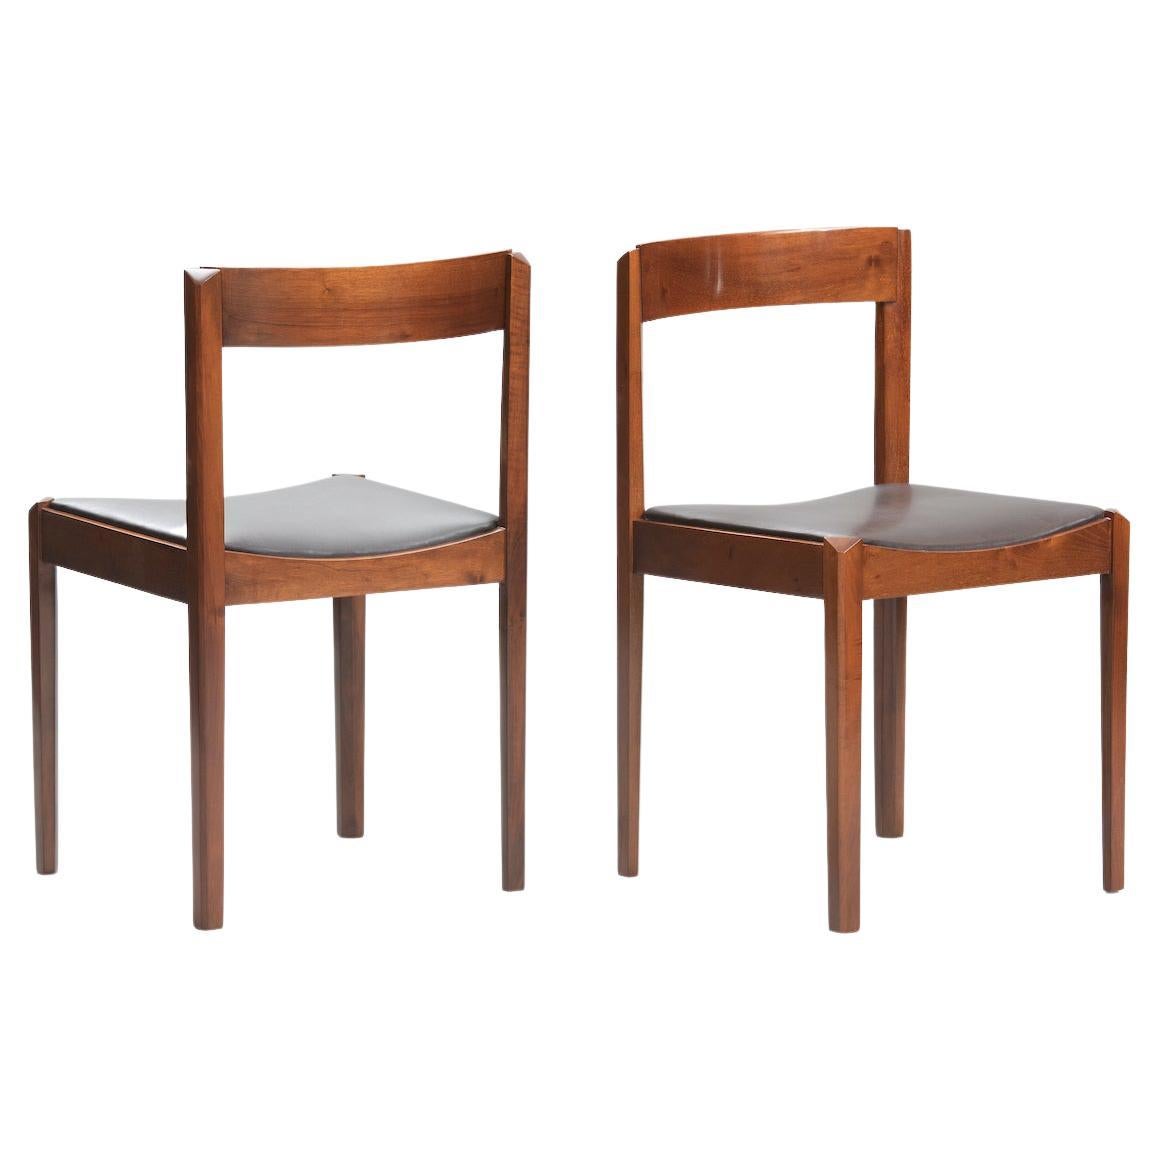 Giovanni Ausenda Chairs for Stilwood One Pair